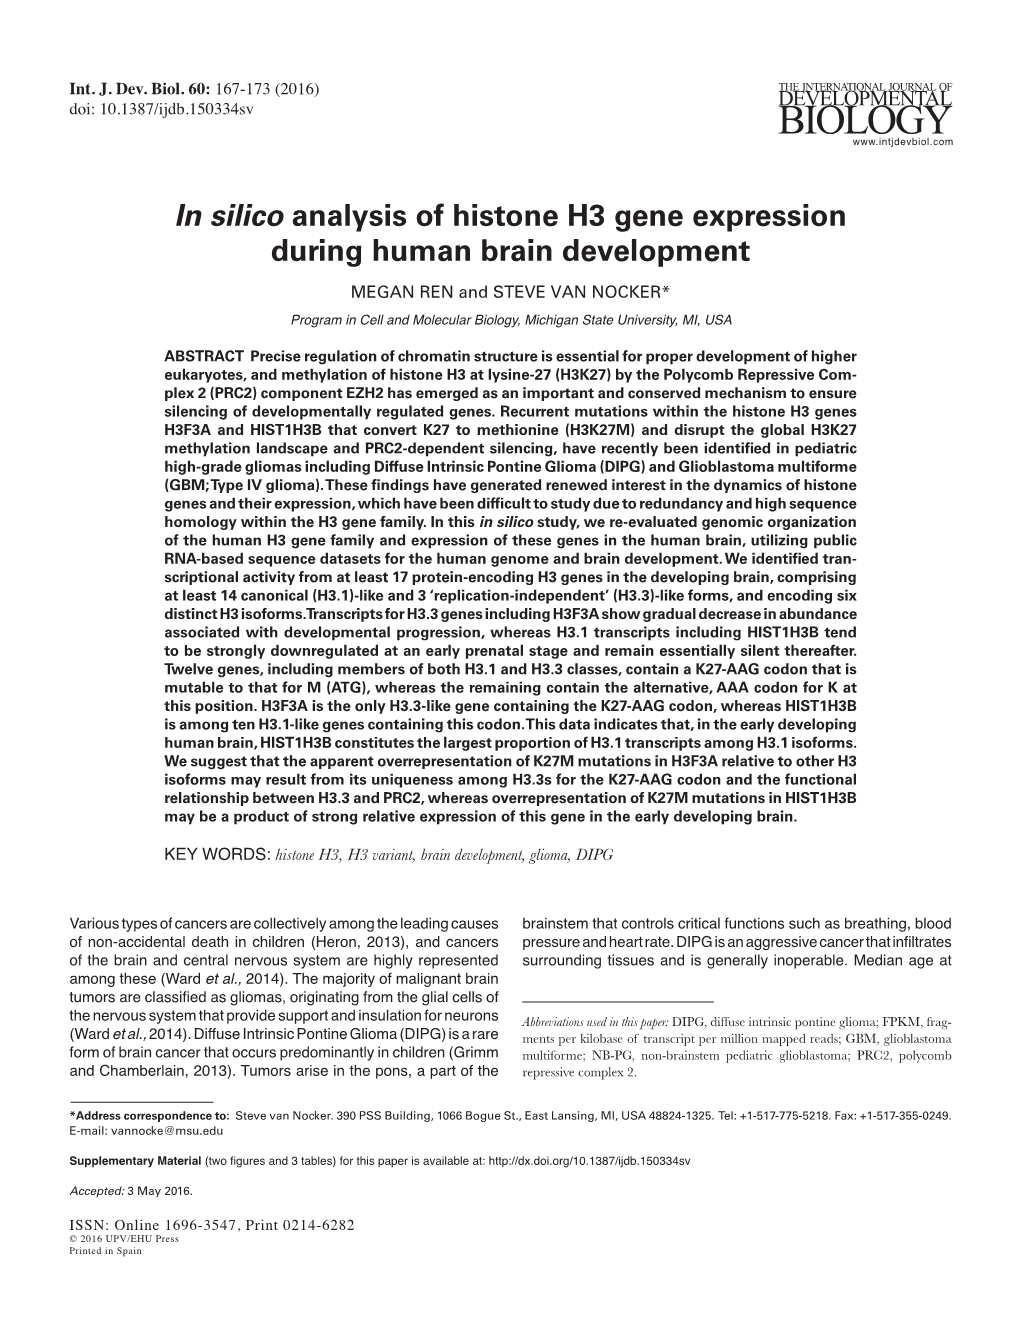 In Silico Analysis of Histone H3 Gene Expression During Human Brain Development MEGAN REN and STEVE VAN NOCKER*